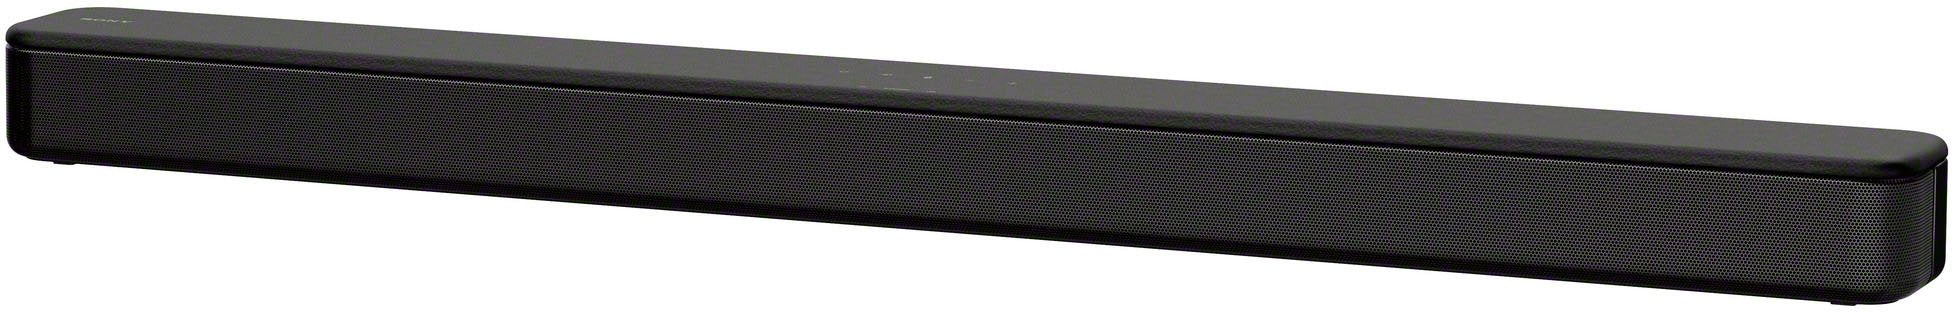 Sony HTS100F 2.0 Channel Soundbar with Bass Reflex Speaker - Black (Certified Refurbished)